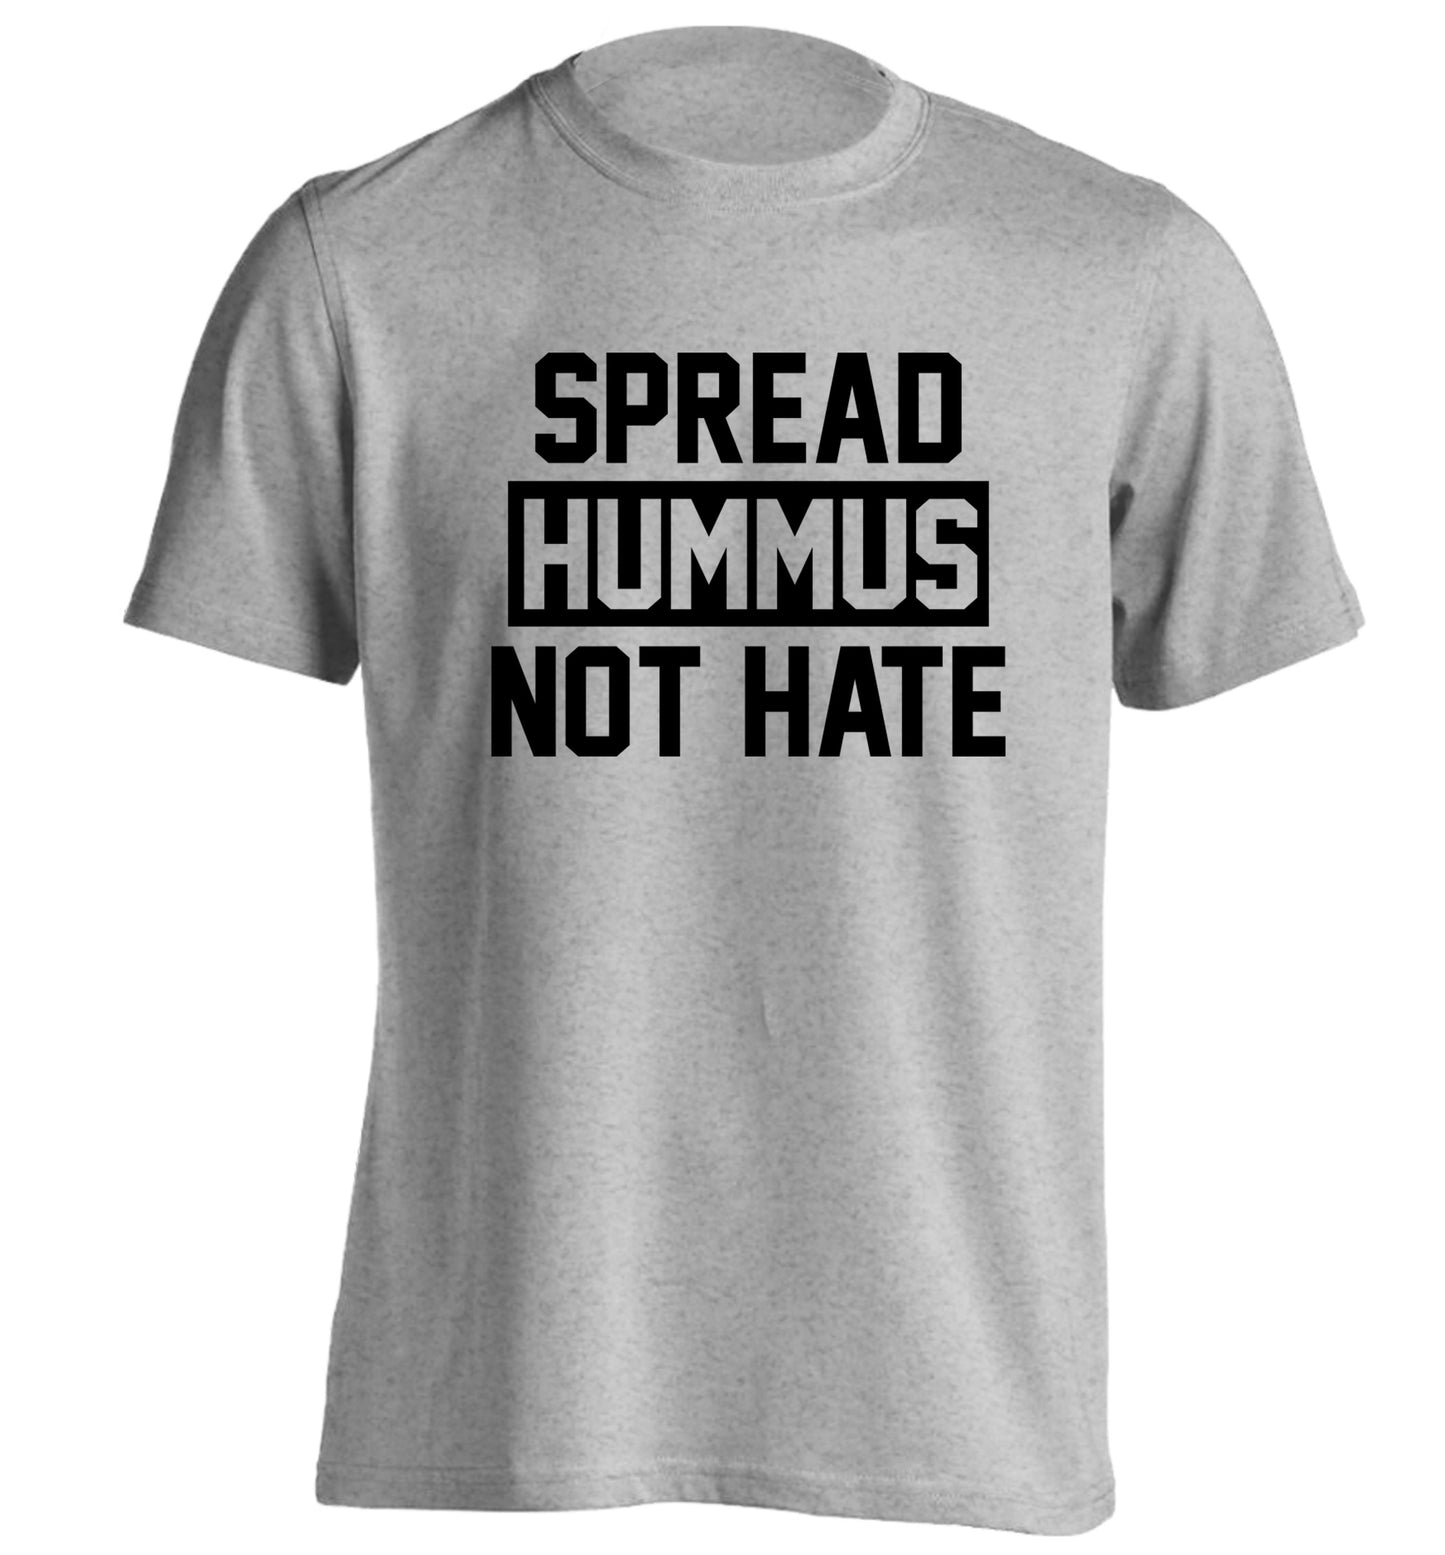 Spread hummus not hate adults unisex grey Tshirt 2XL